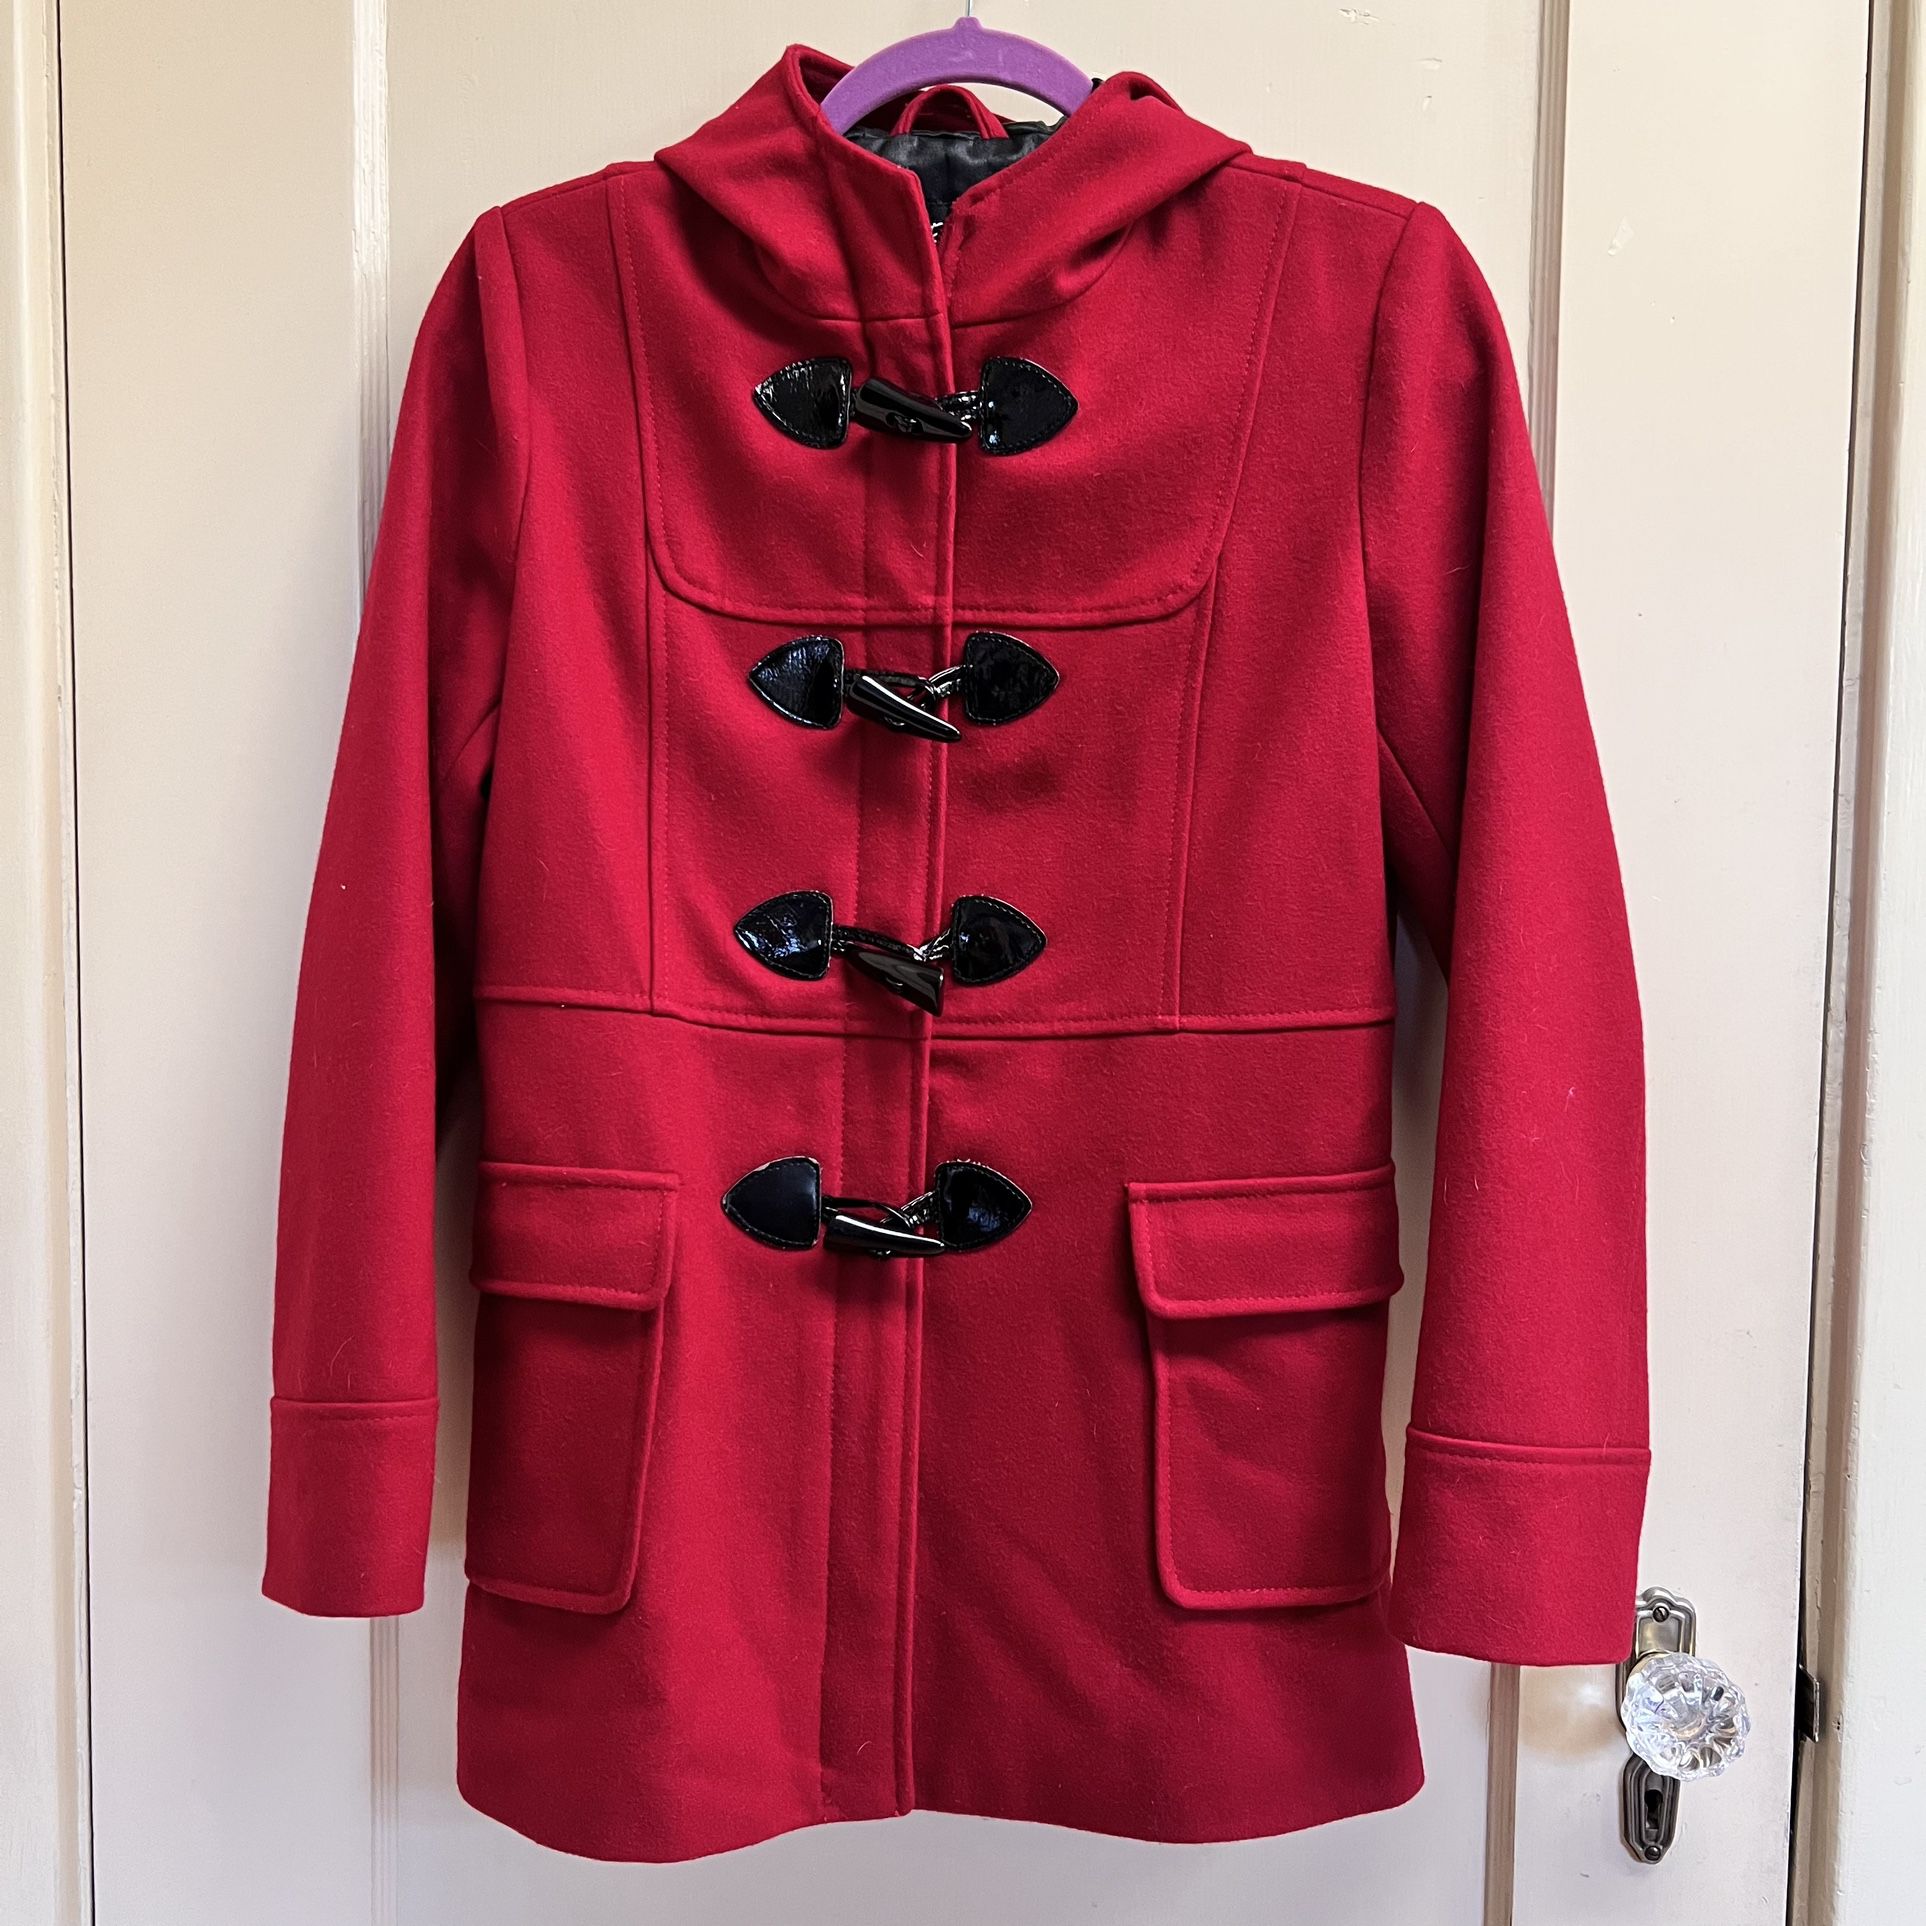 Black Rivet Girls Wool Blend Zippered Red Coat Size L